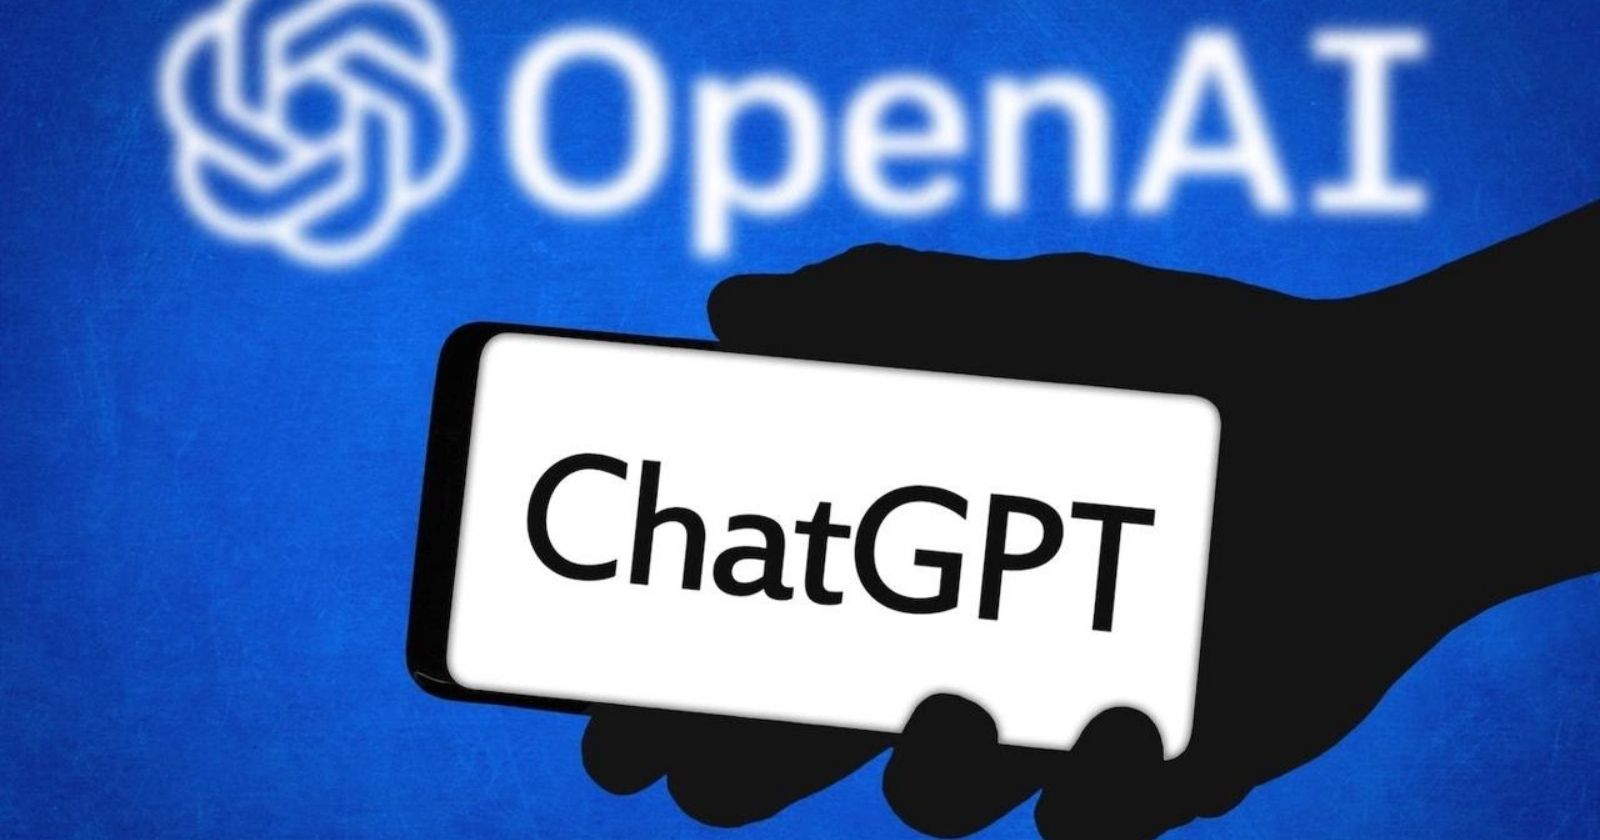 ChatGPT Plus üyelikleri durduruldu! İşte nedeni